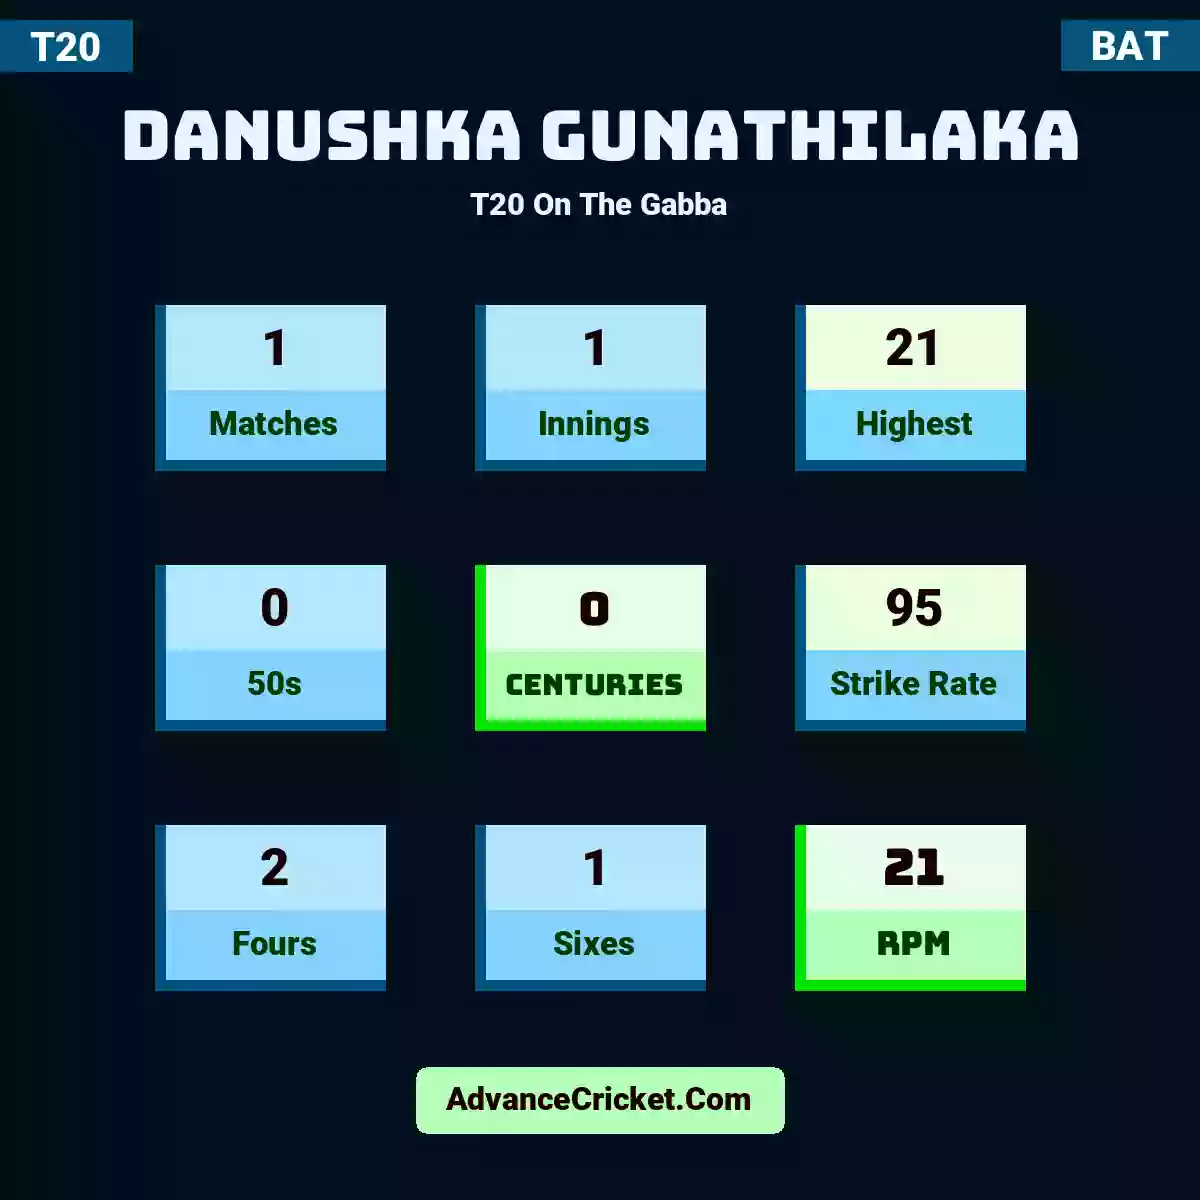 Danushka Gunathilaka T20  On The Gabba, Danushka Gunathilaka played 1 matches, scored 21 runs as highest, 0 half-centuries, and 0 centuries, with a strike rate of 95. D.Gunathilaka hit 2 fours and 1 sixes, with an RPM of 21.